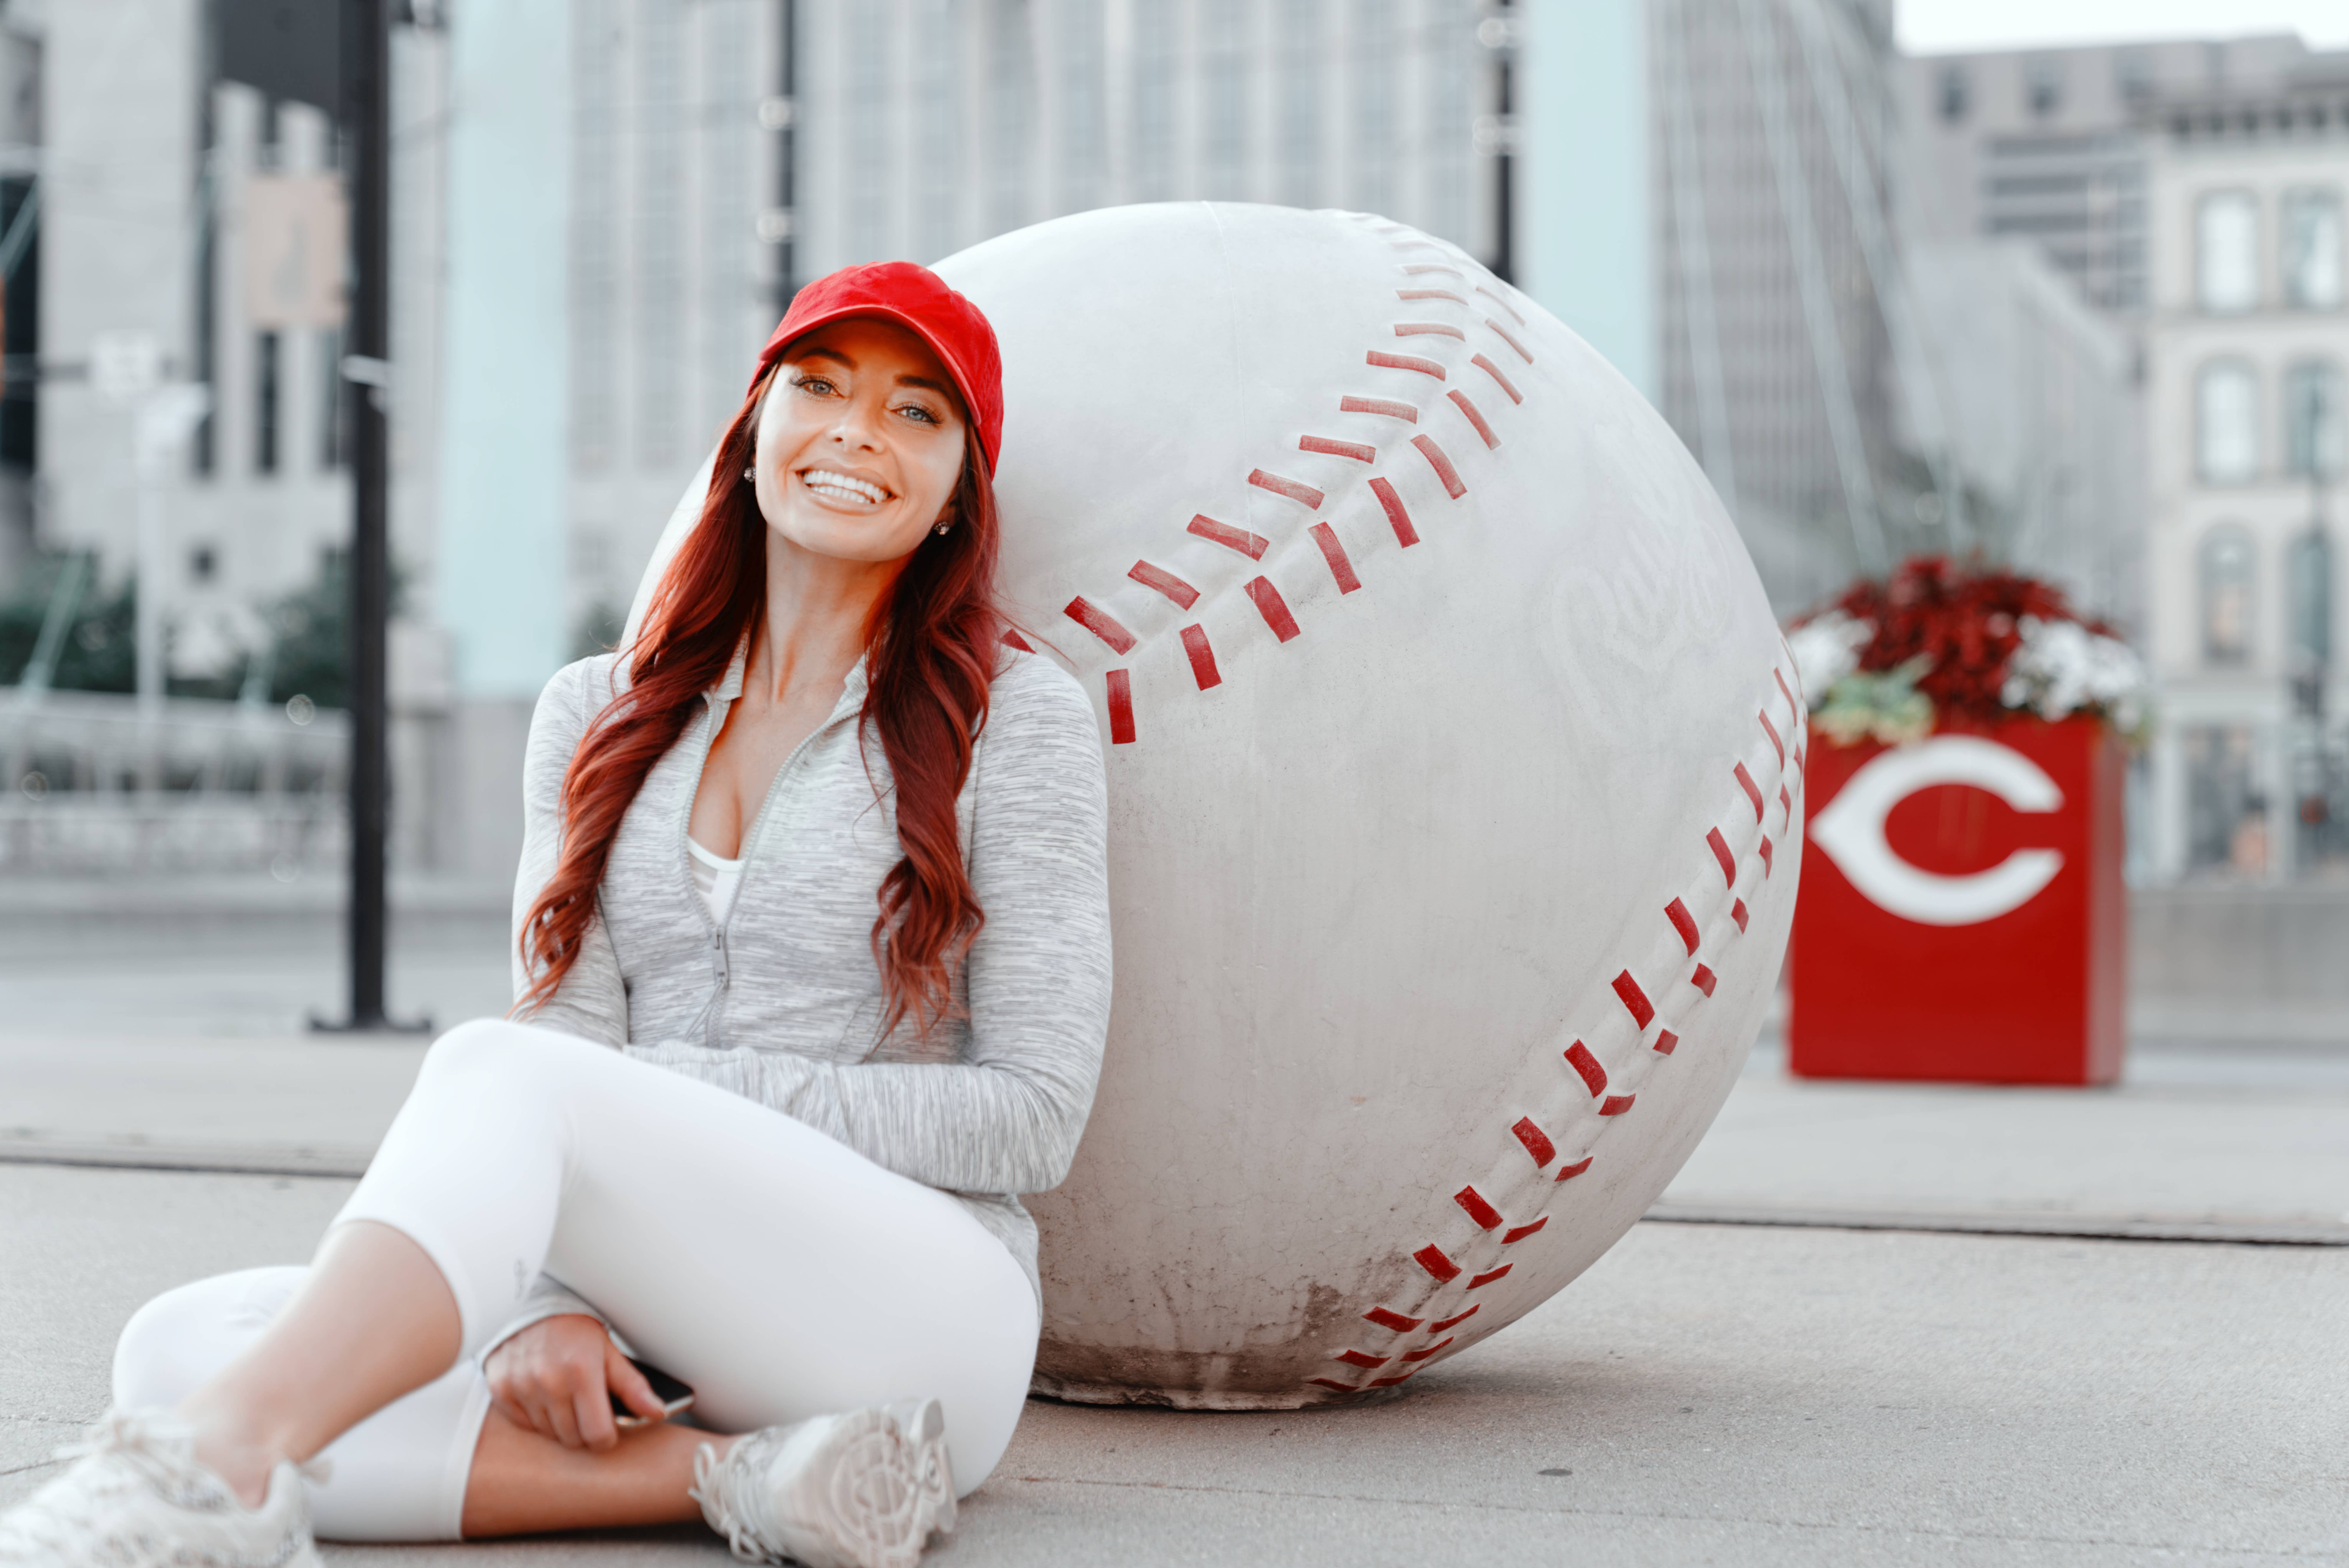 Rachel Luba, the Groundbreaking Agent for MLB Pitcher Trevor Bauer